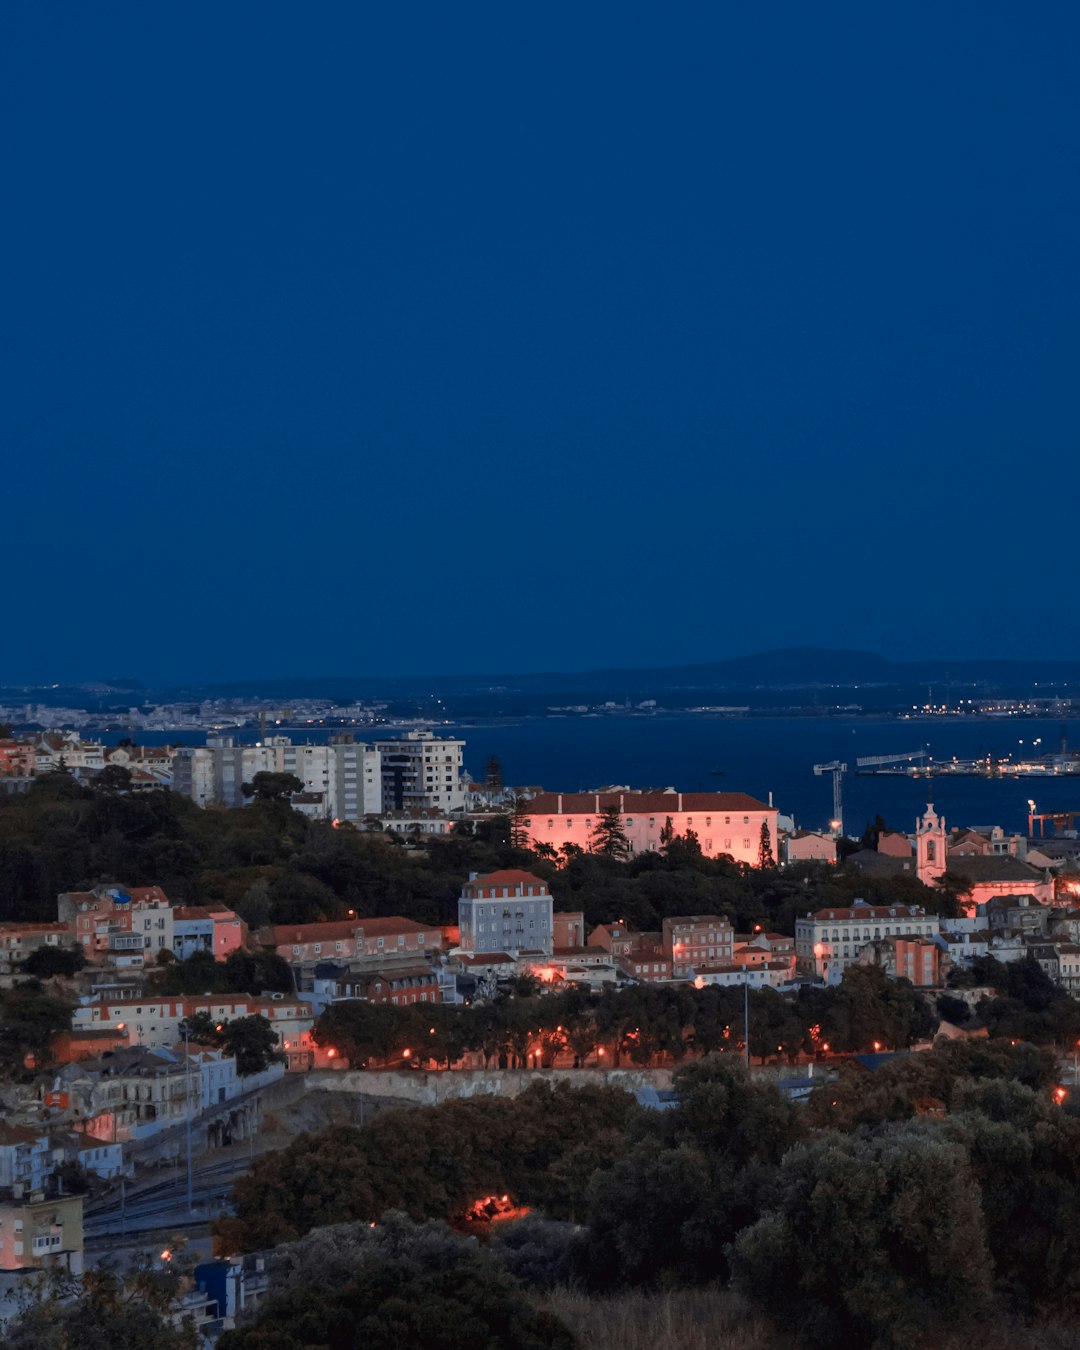 city skyline under blue sky during night time